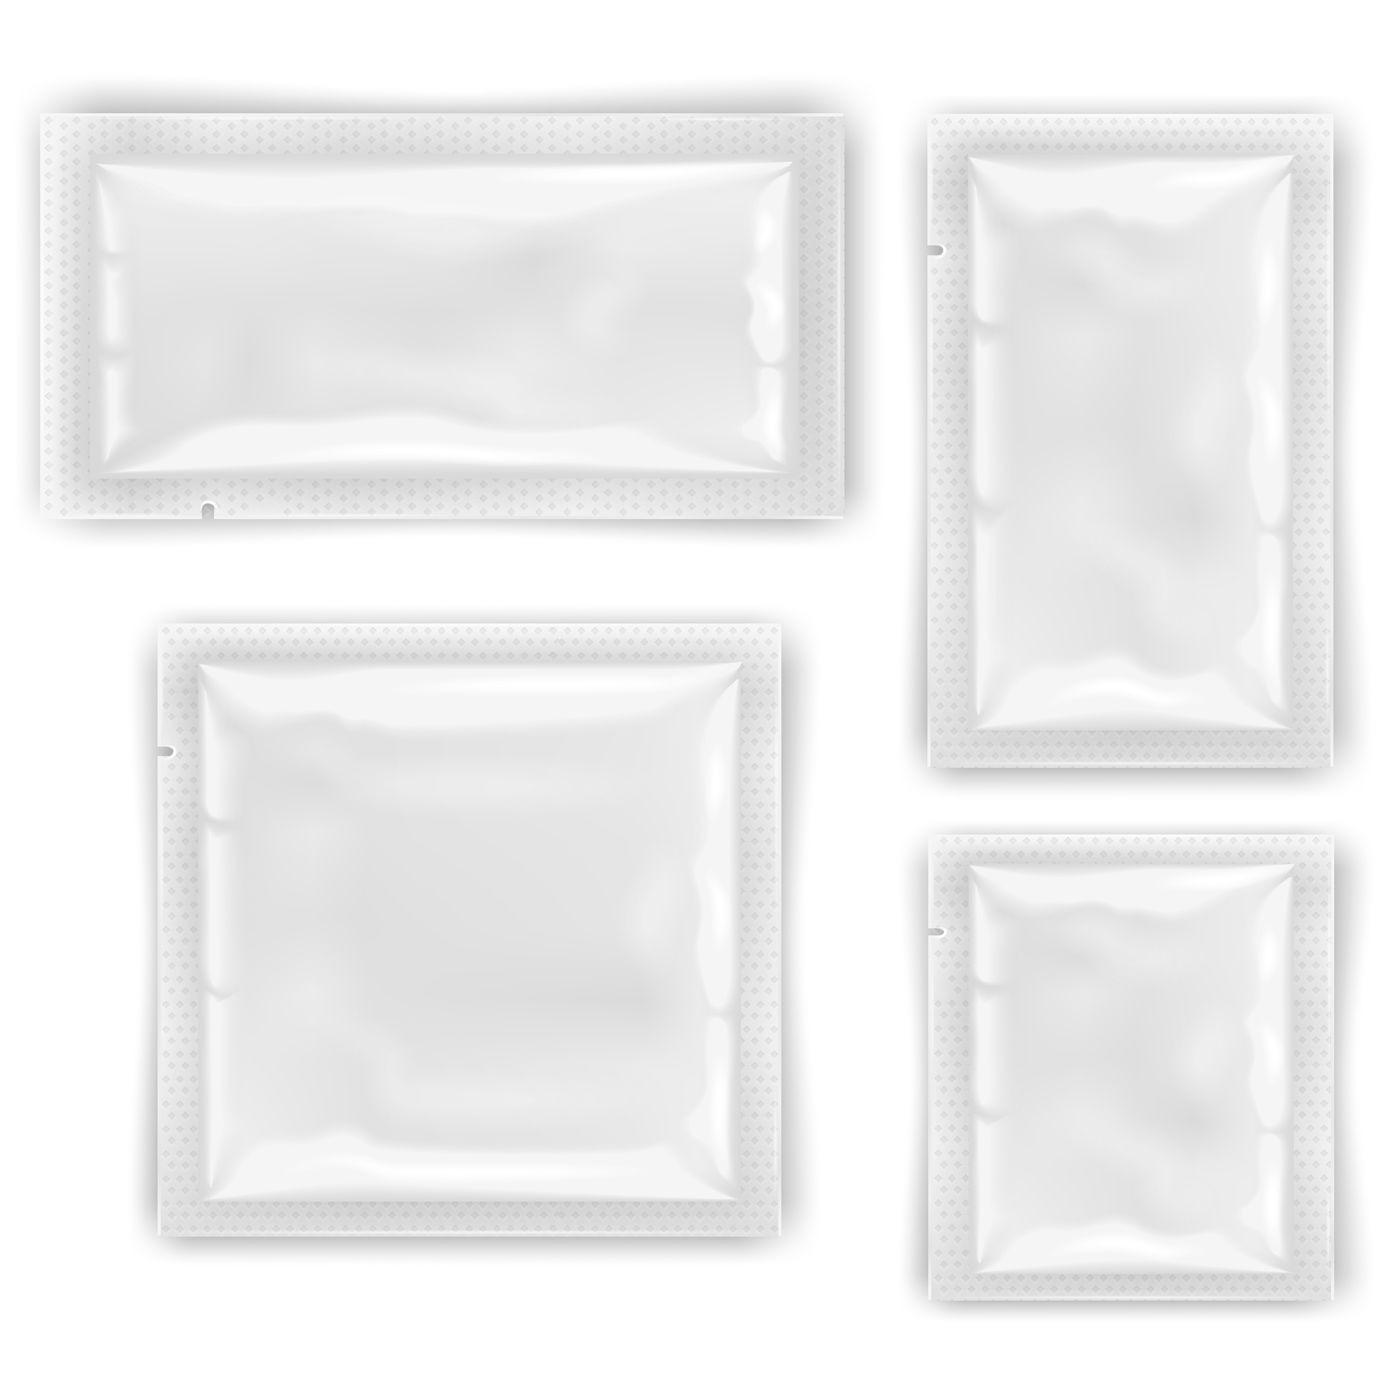 Download Condom Packaging Mockup - Free Mockups | PSD Template | Design Assets